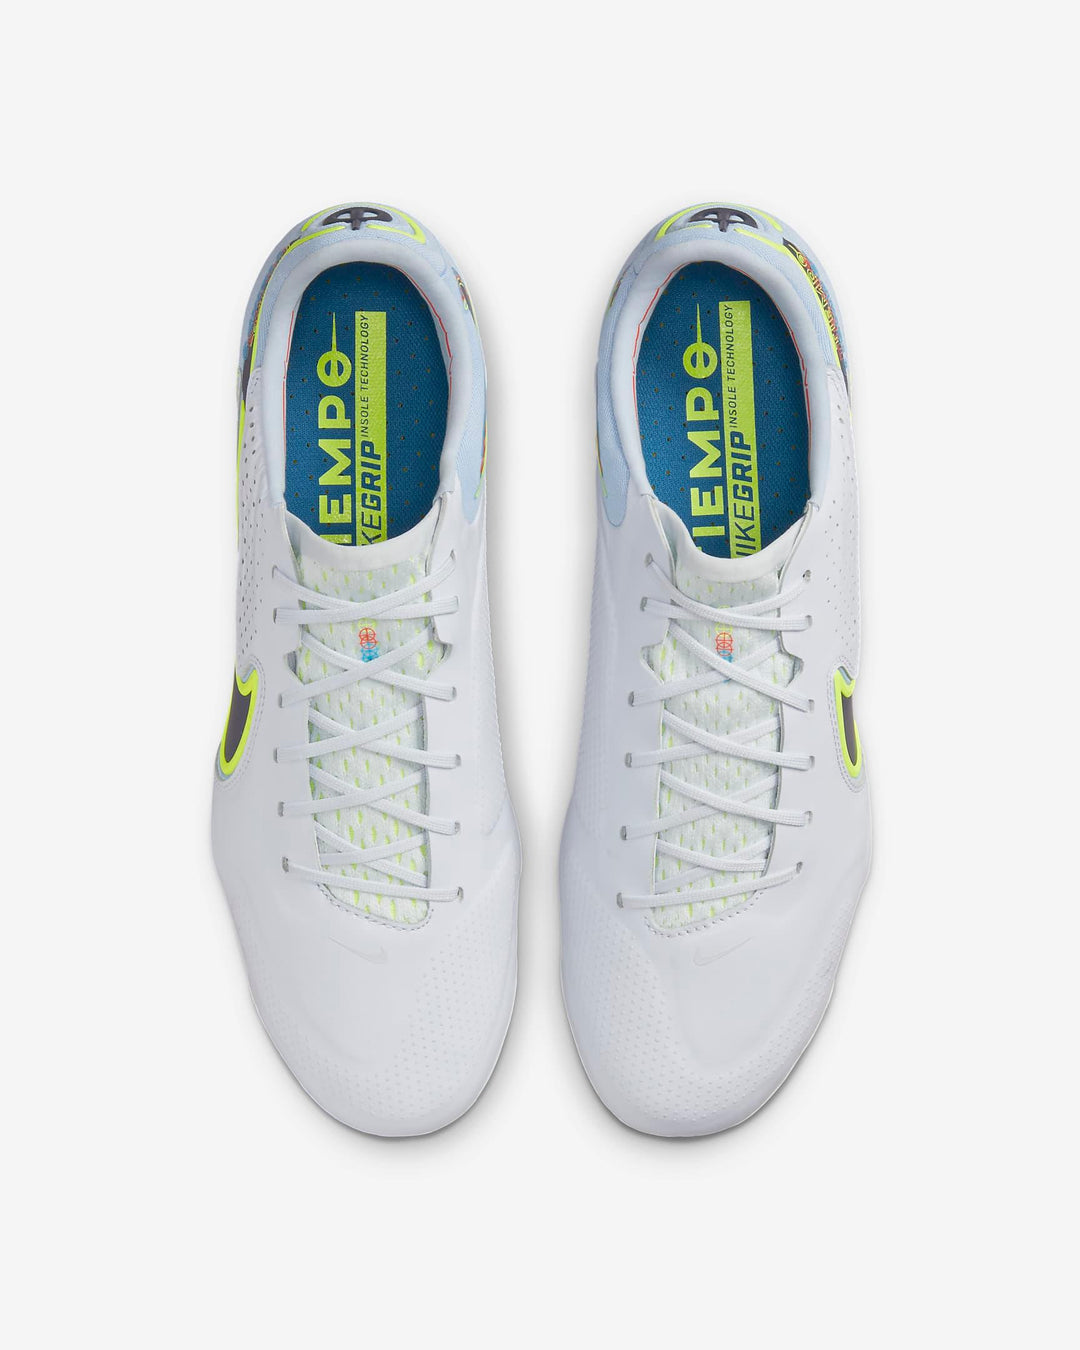 Giày Nike Tiempo Legend 9 Elite FG Soccer Shoes #Football Grey - Kallos Vietnam